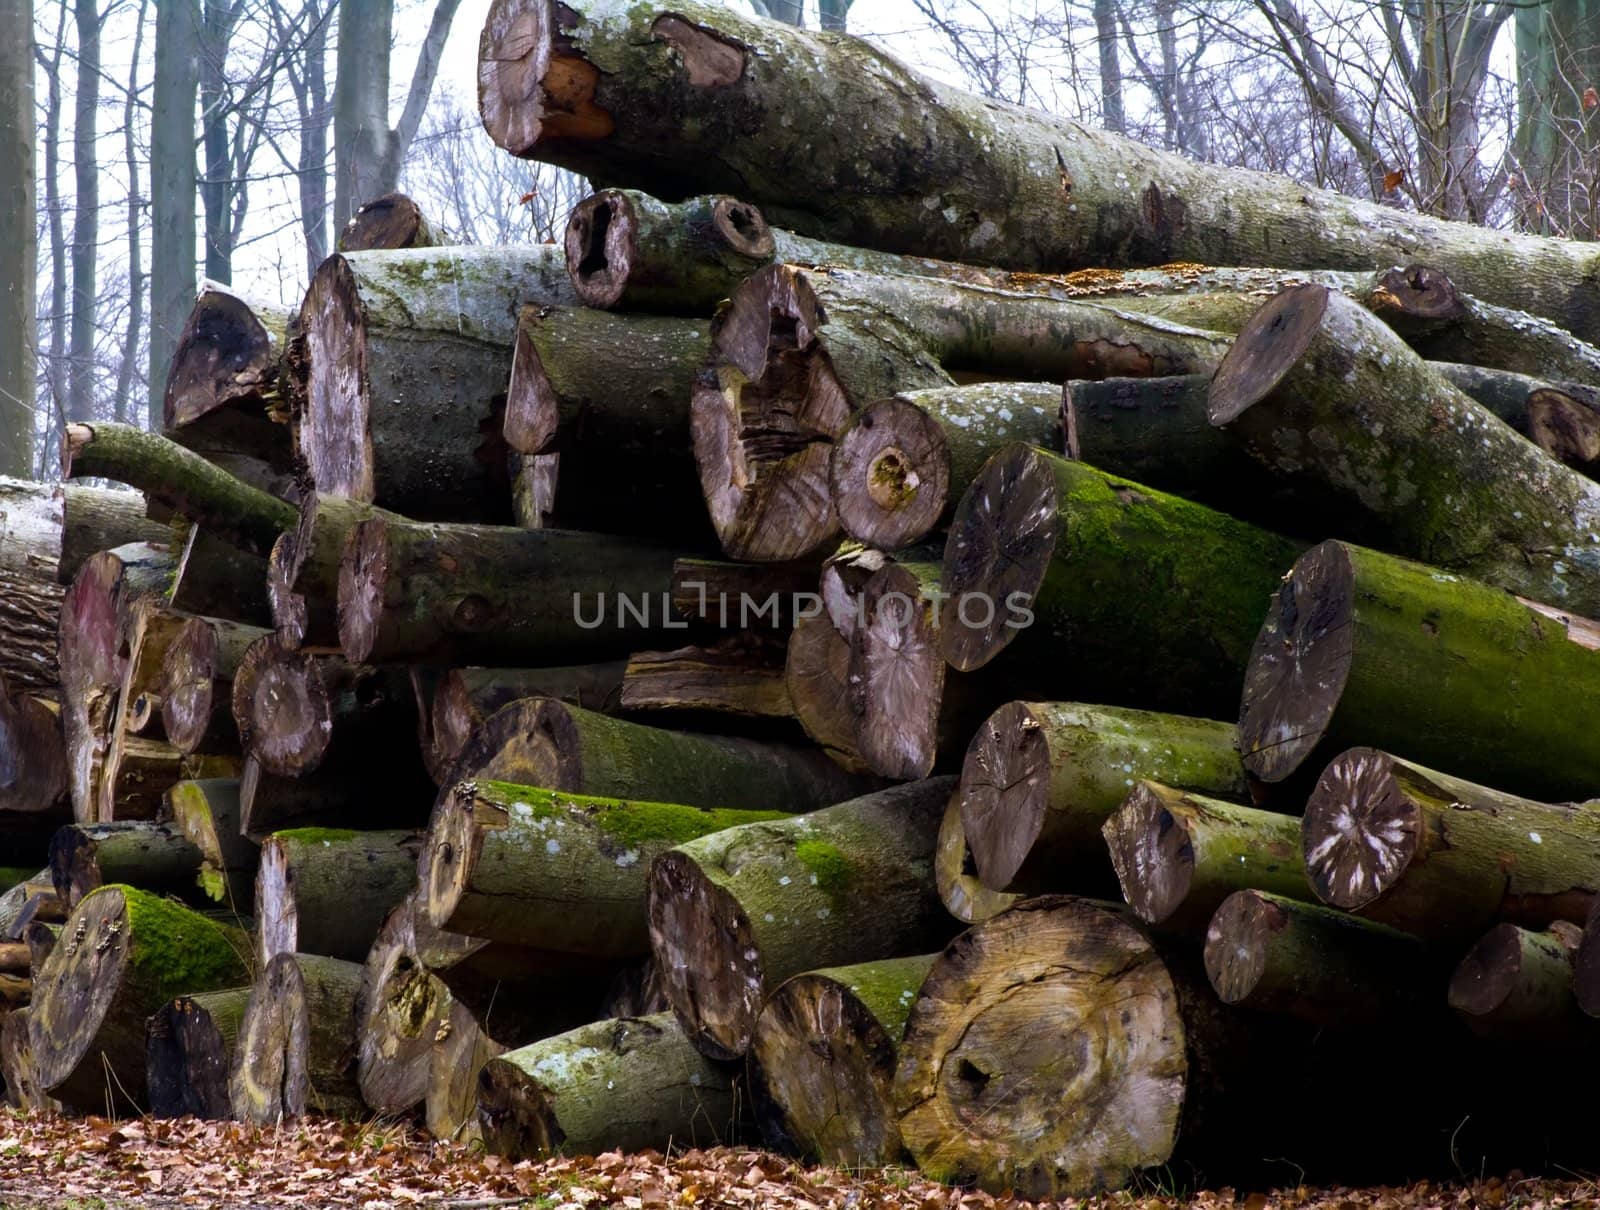 A heap of trunks by baggiovara